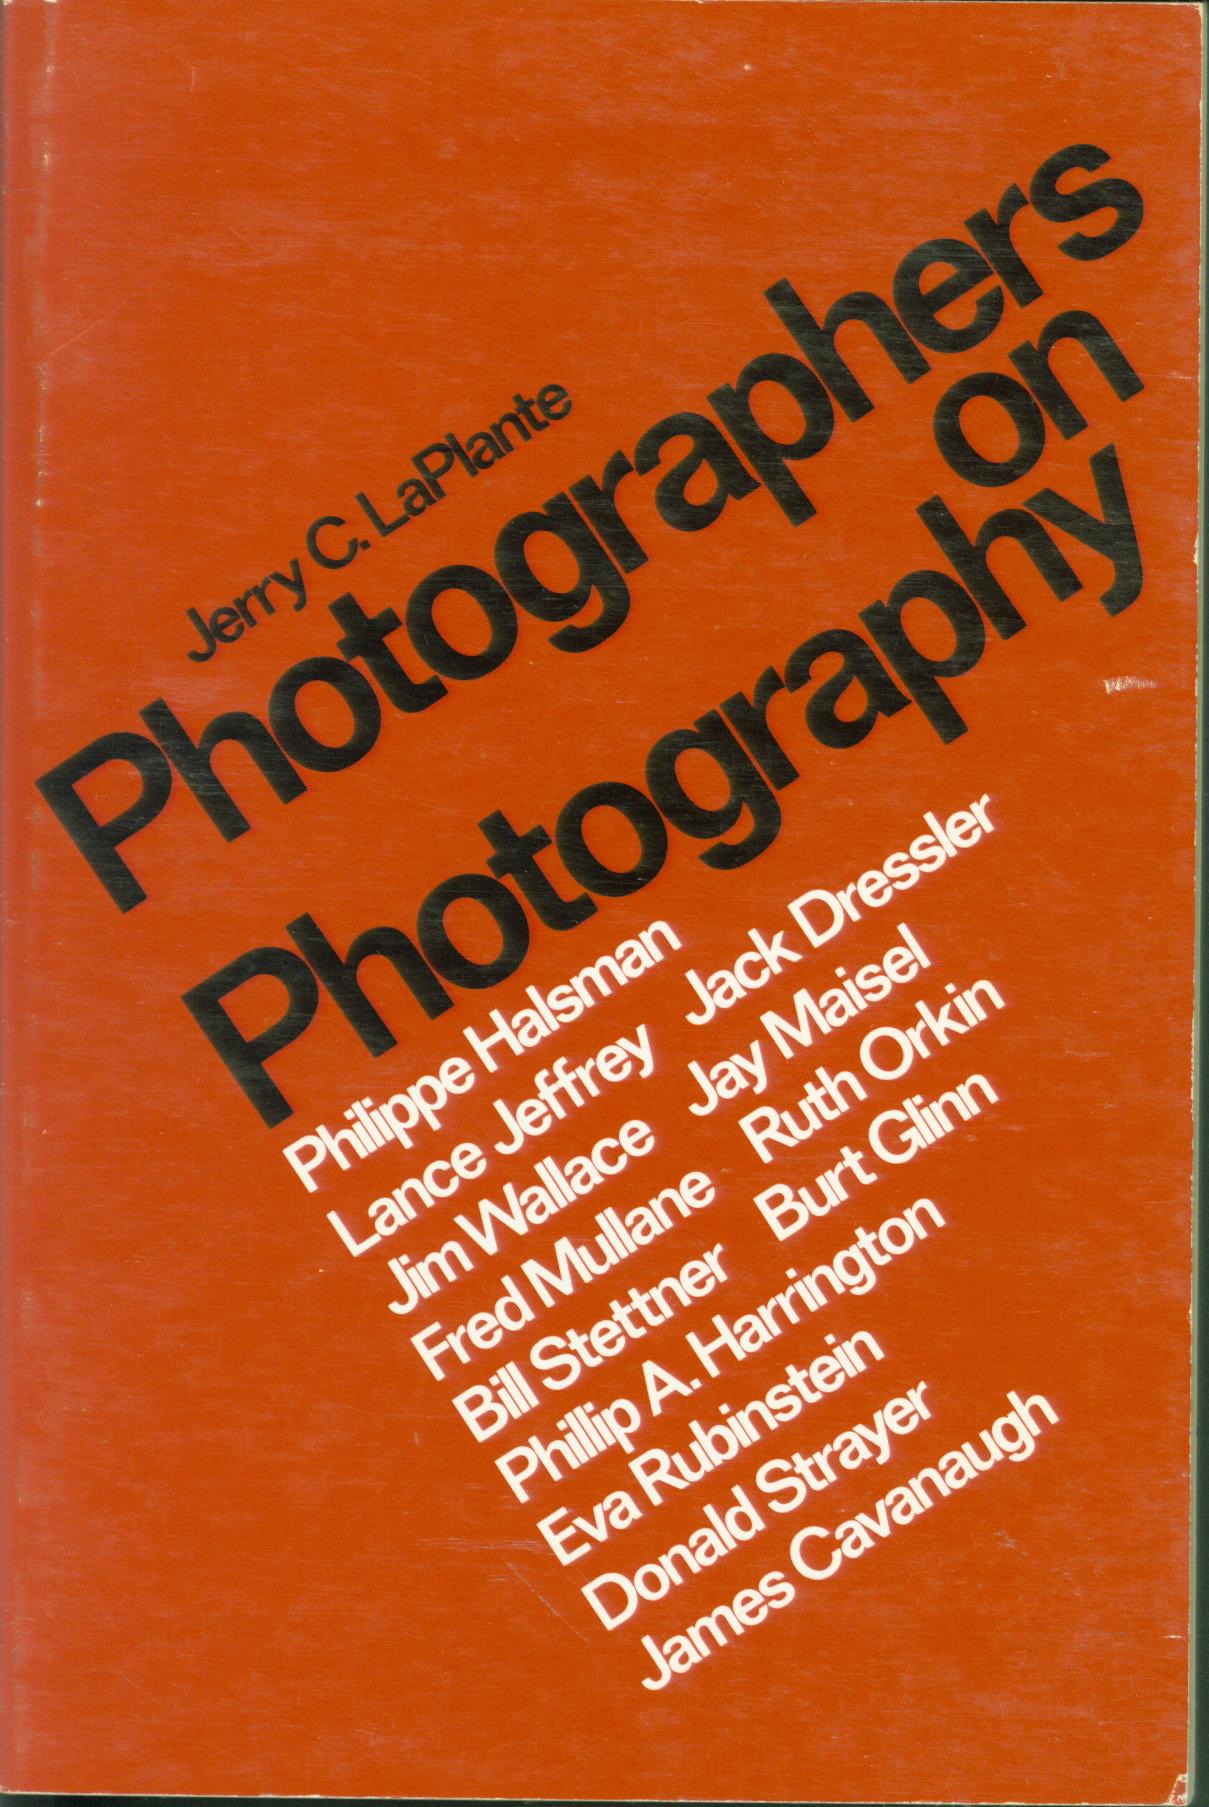 PHOTOGRAPHERS ON PHOTOGRAPHY. 